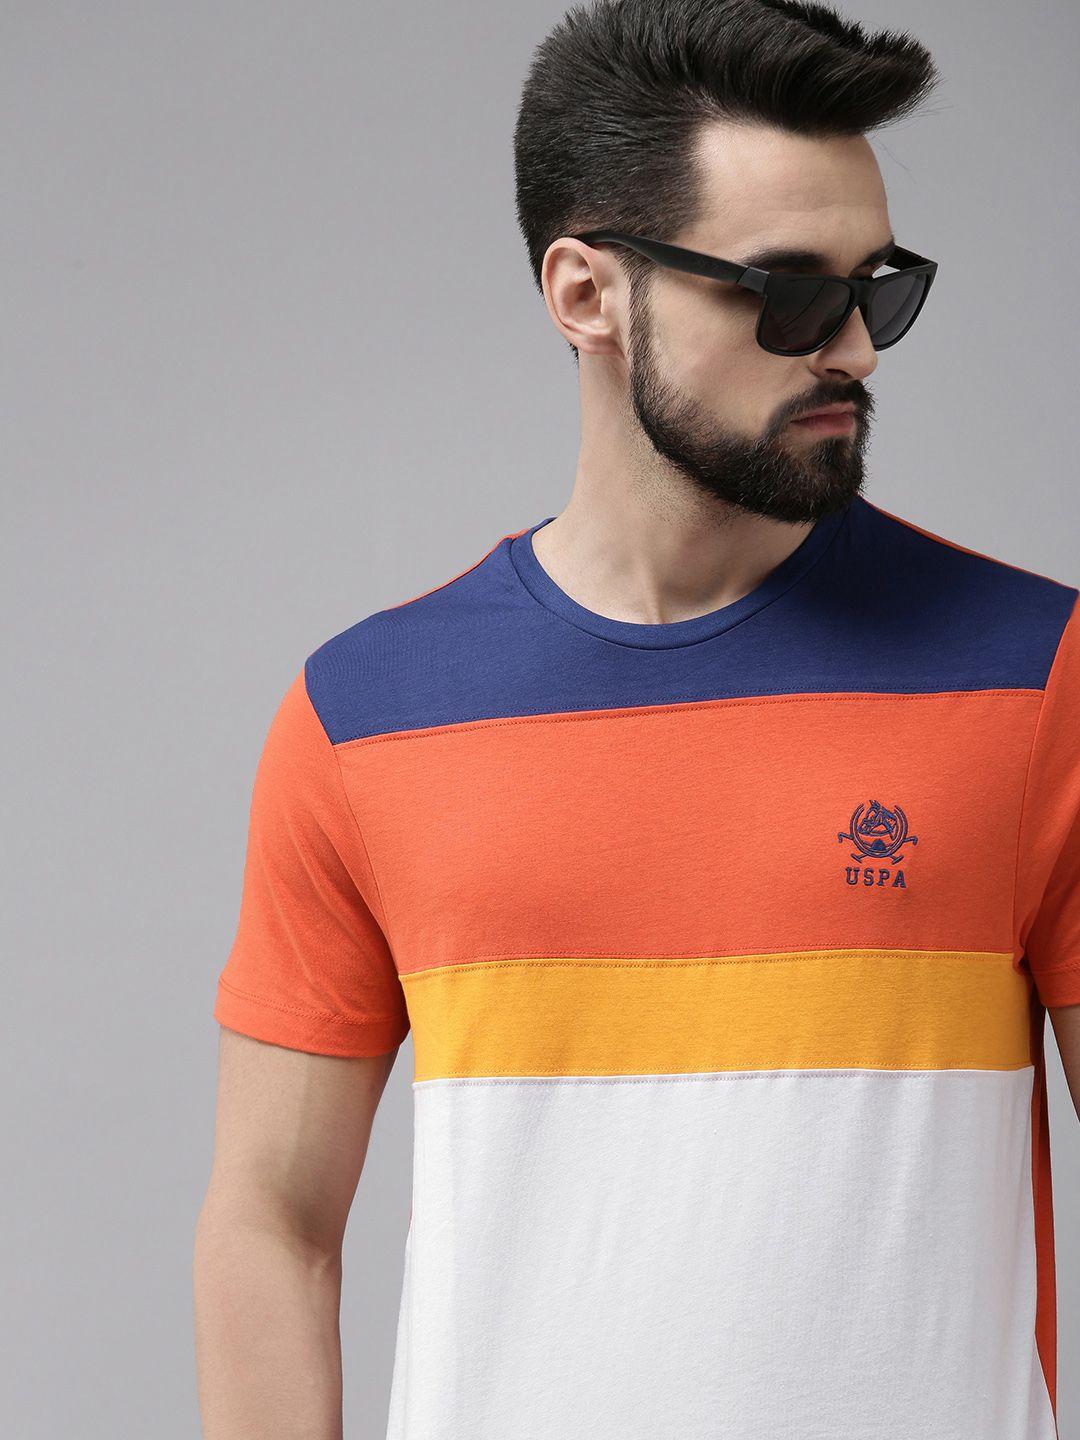 u.s. polo assn. men orange & white colourblocked t-shirt